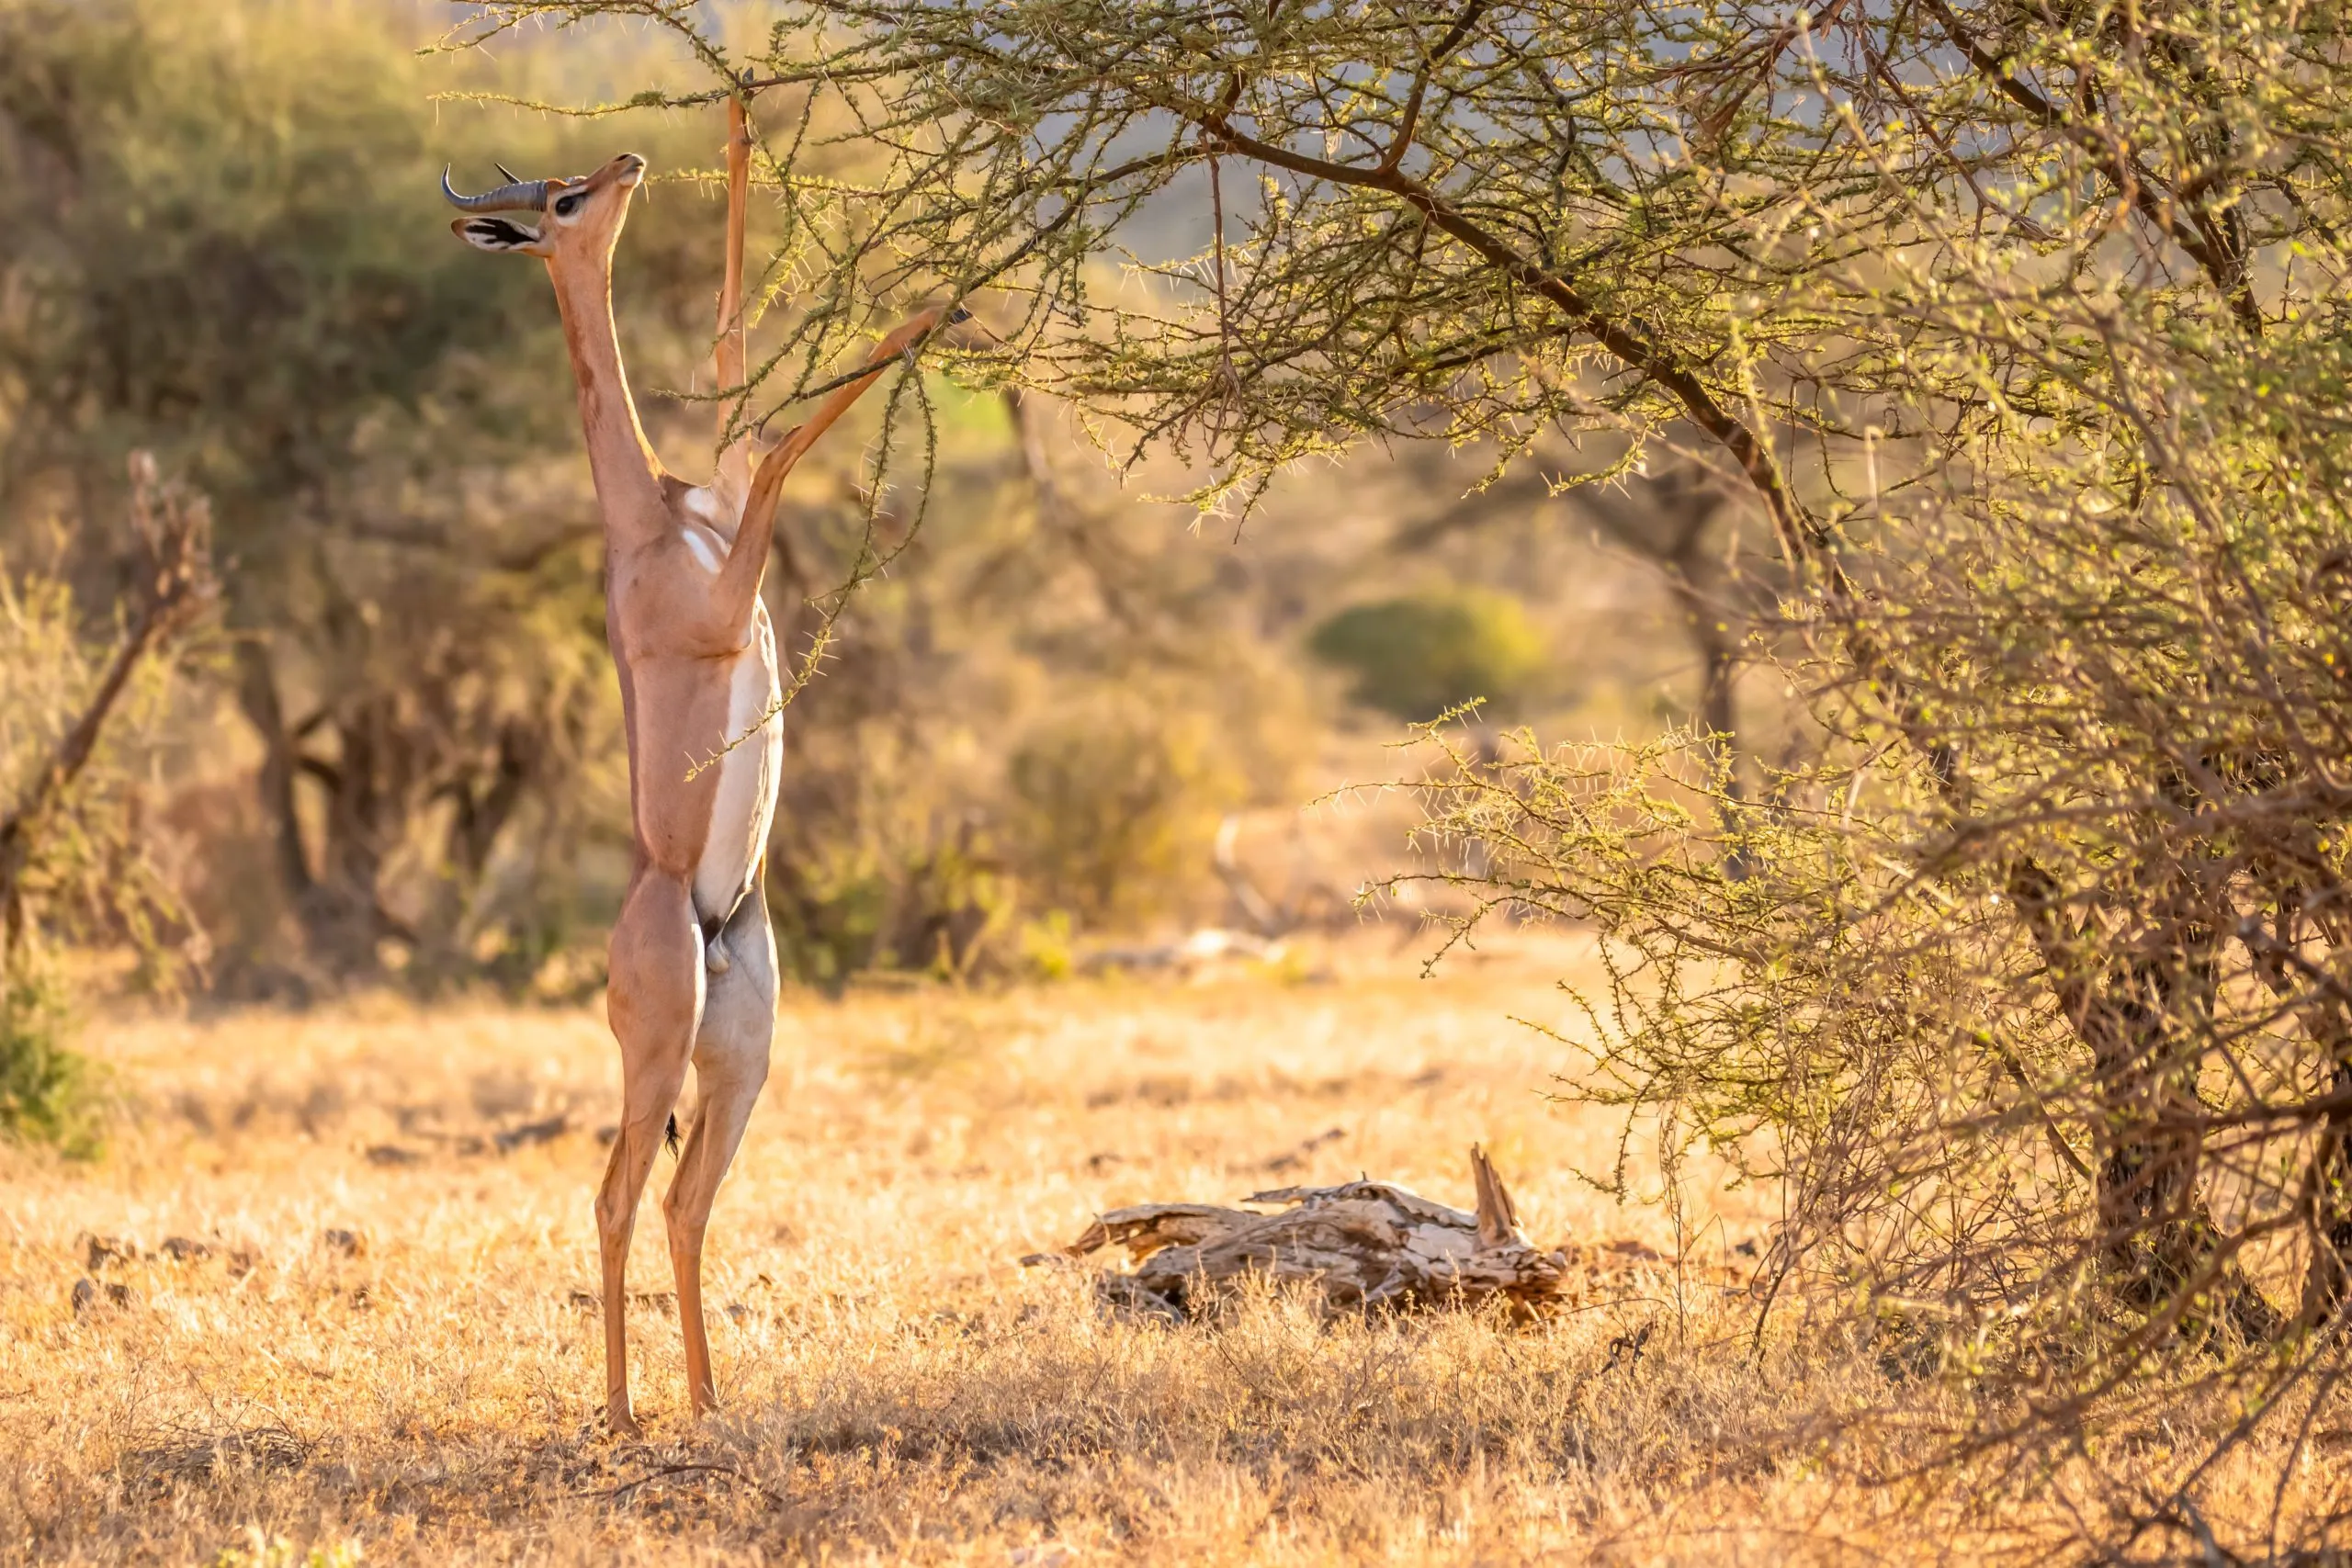 Gerenuk, Litocranius walleri also giraffe gazelle,long-necked antelope, long slender neck and limbs,standing on hind legs during feeding leaves. Evening african colors. Samburu National Reserve, Kenya